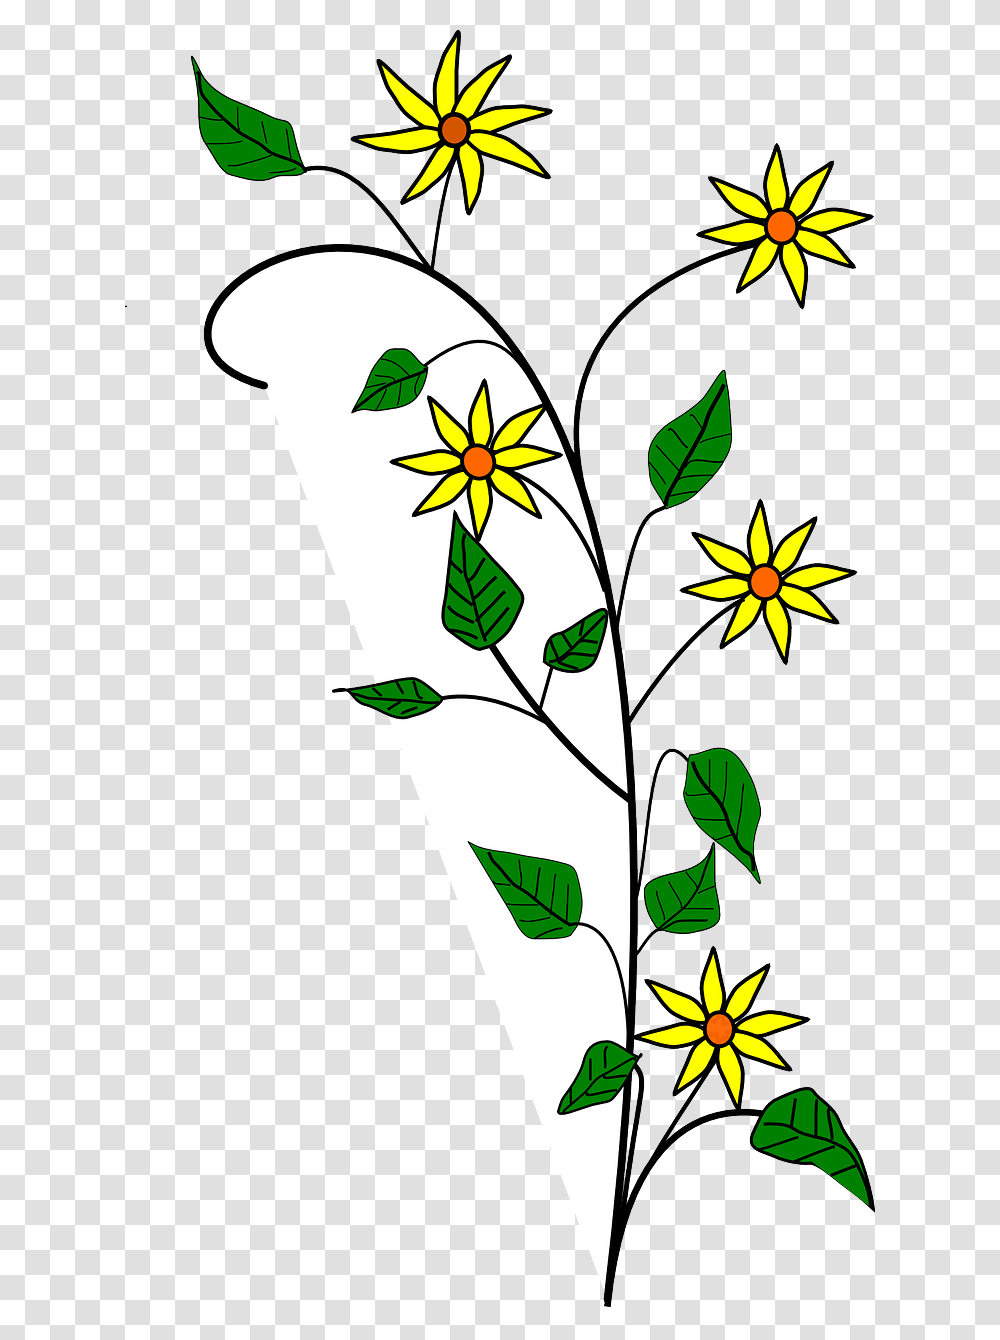 Flowers Floral Clipart Vector Clip Art Online Royalty, Leaf, Plant, Blossom, Petal Transparent Png